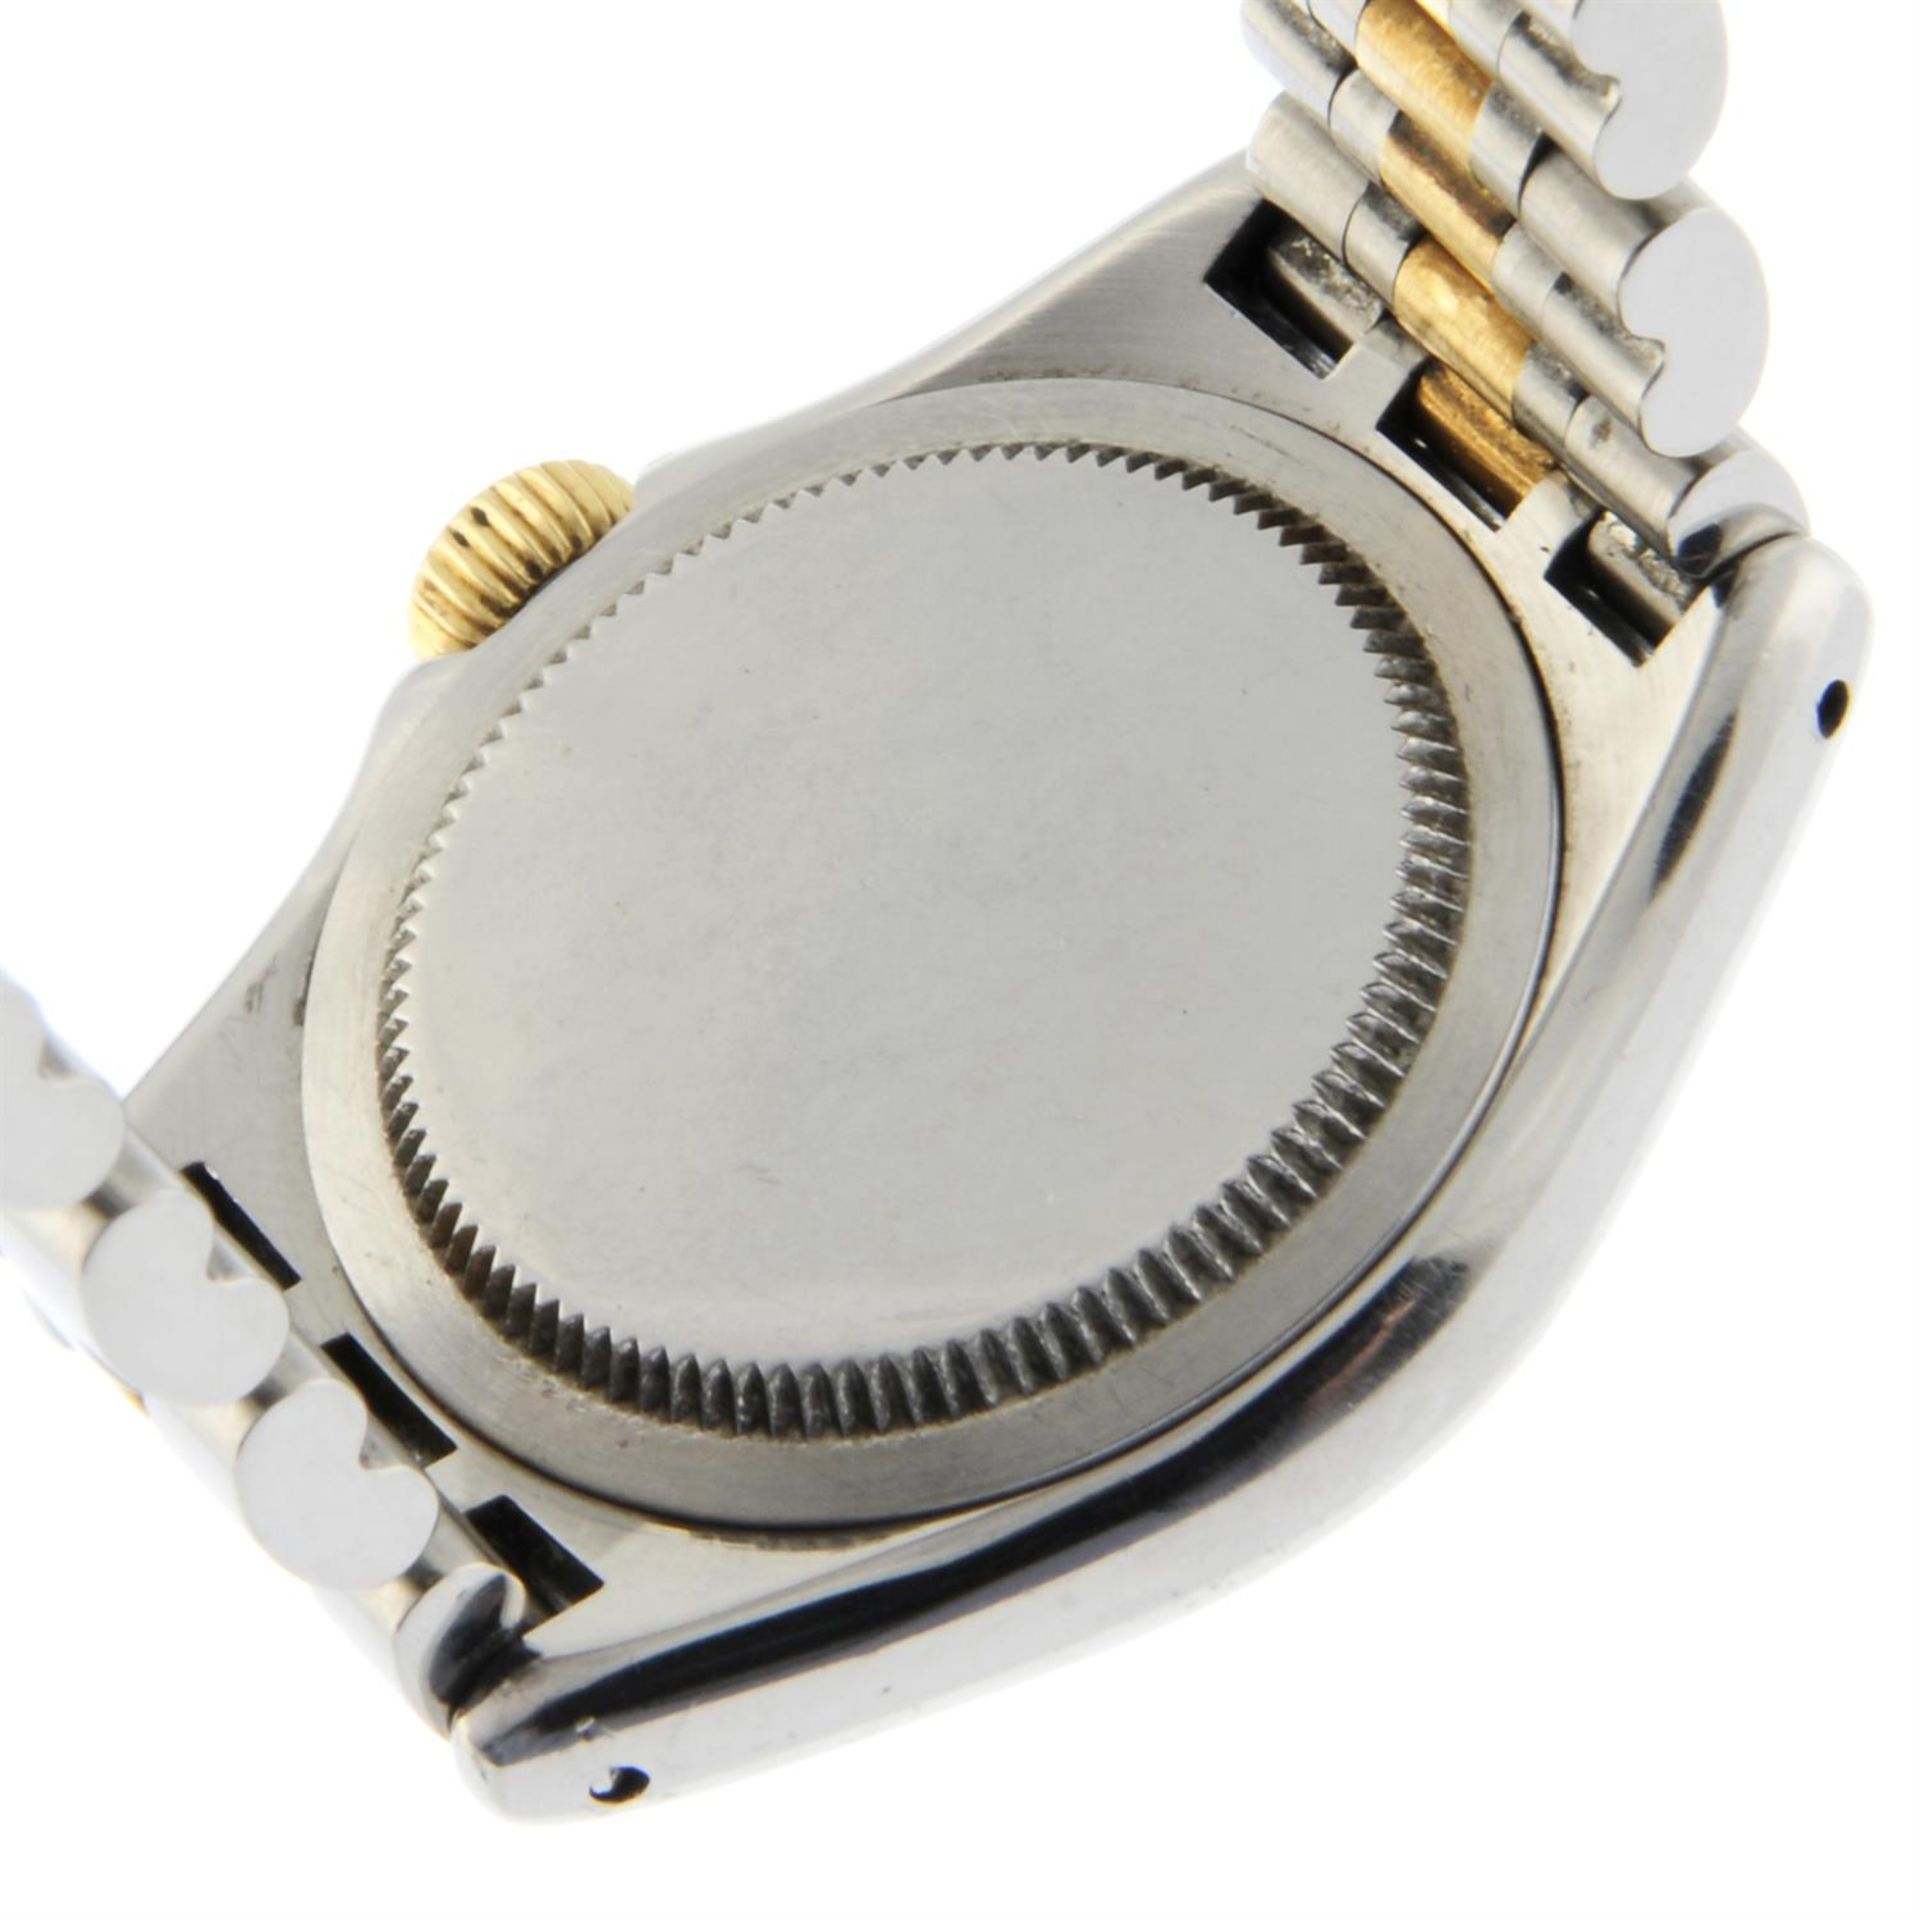 Tudor - a Monarch watch, 27mm. - Image 4 of 5